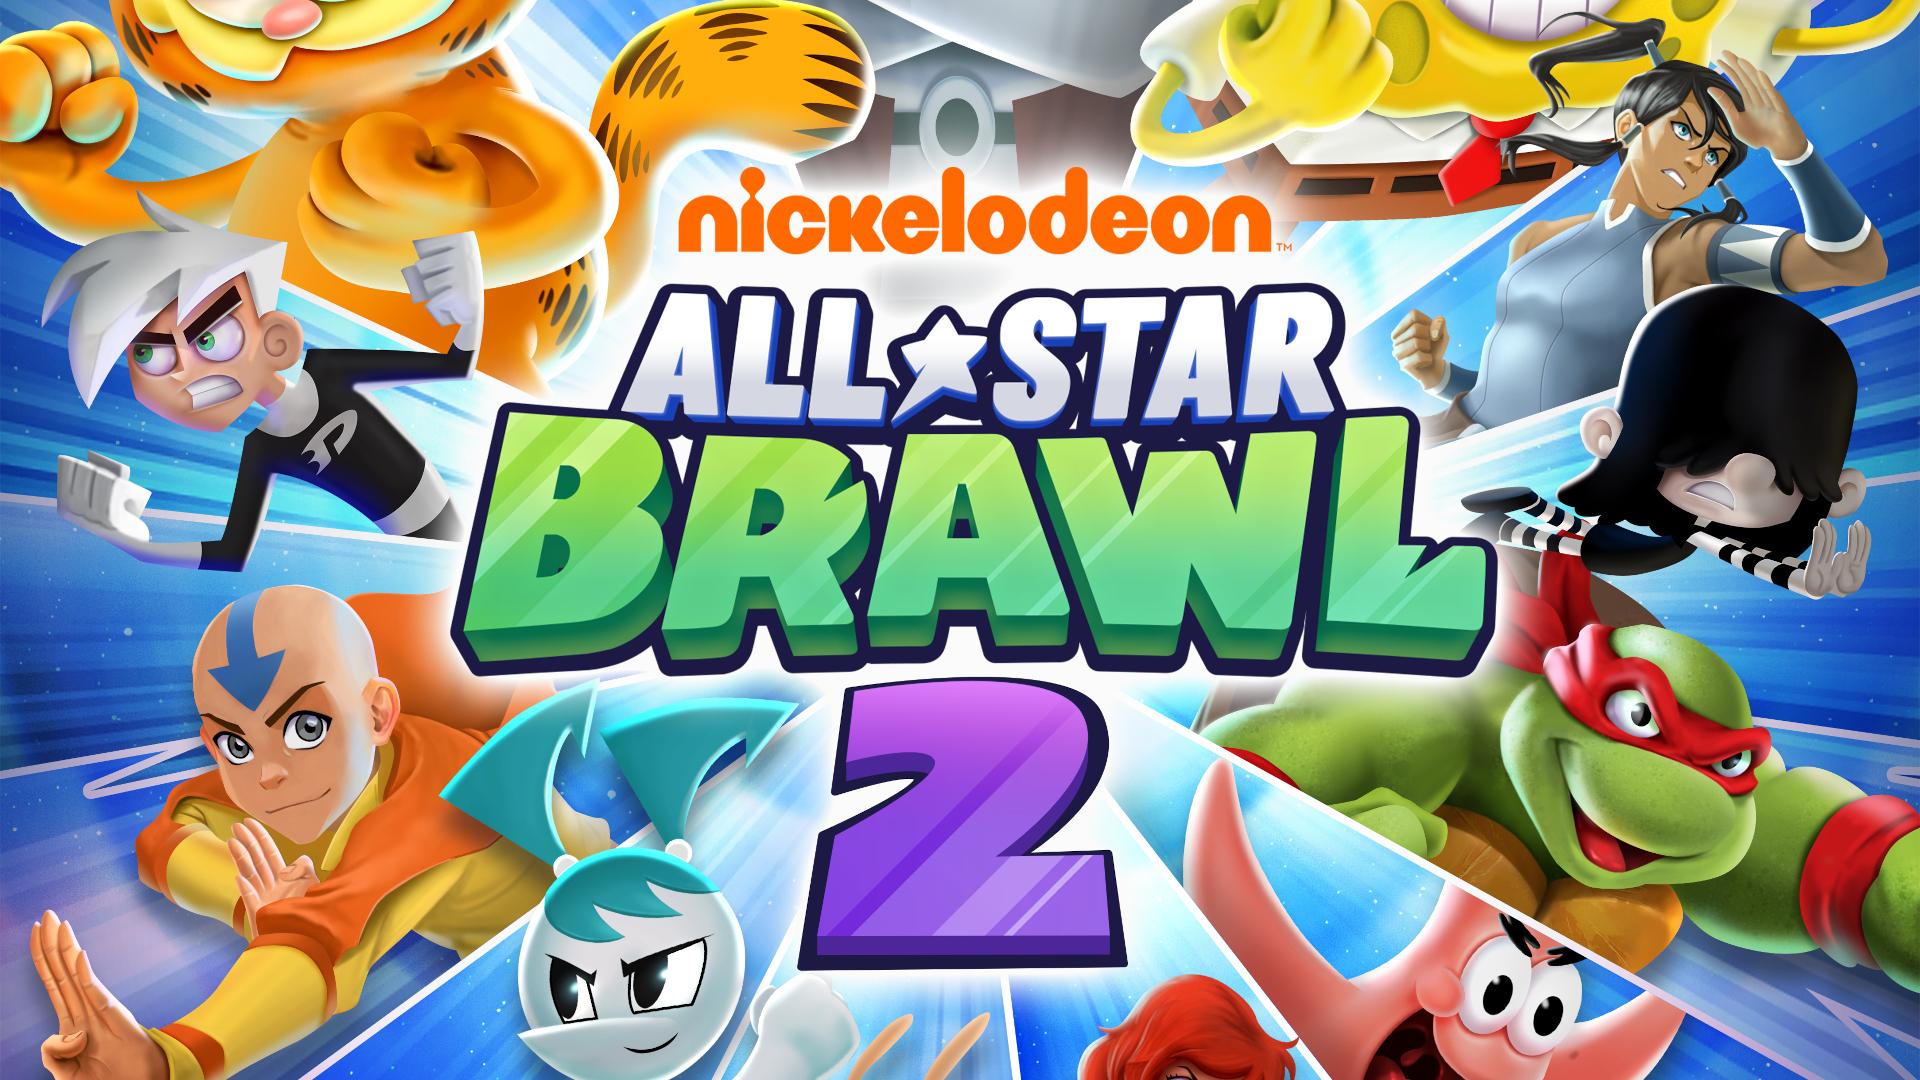 Prince Zuko Chega ao Nickelodeon All-Star Brawl 2 em Novo DLC